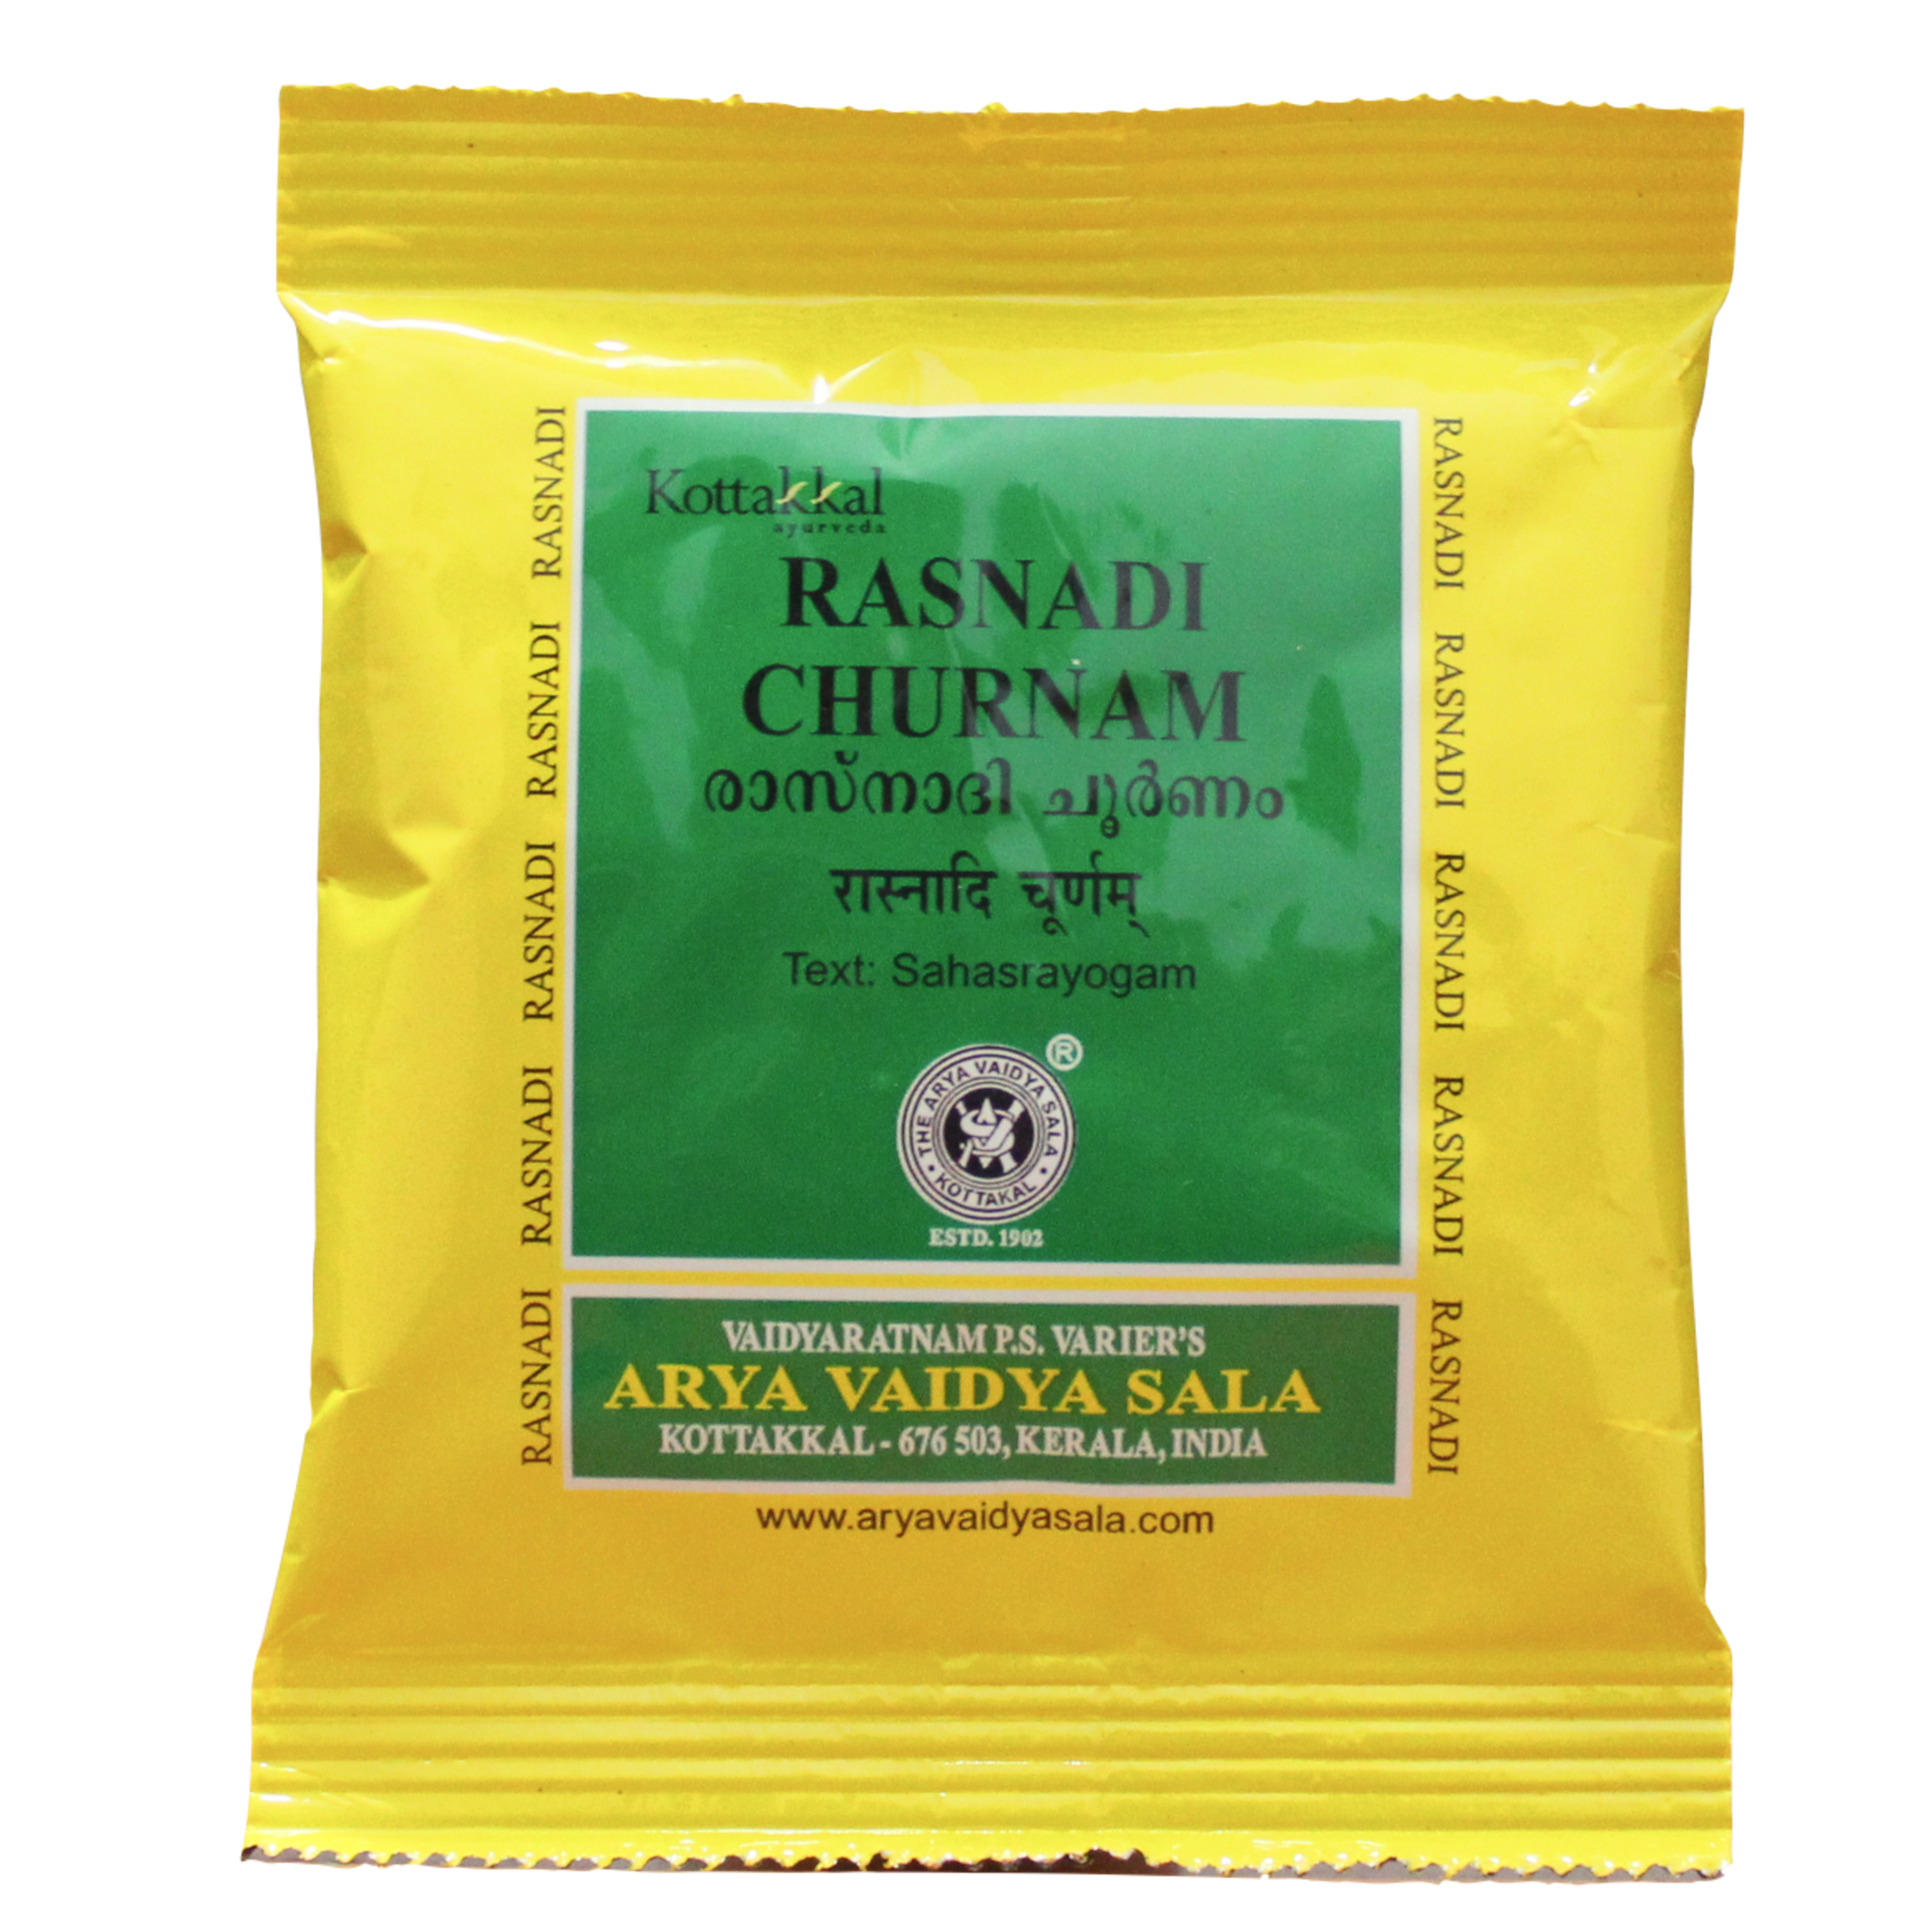 Shop Rasnadi churnam 10gm at price 20.00 from Kottakkal Online - Ayush Care